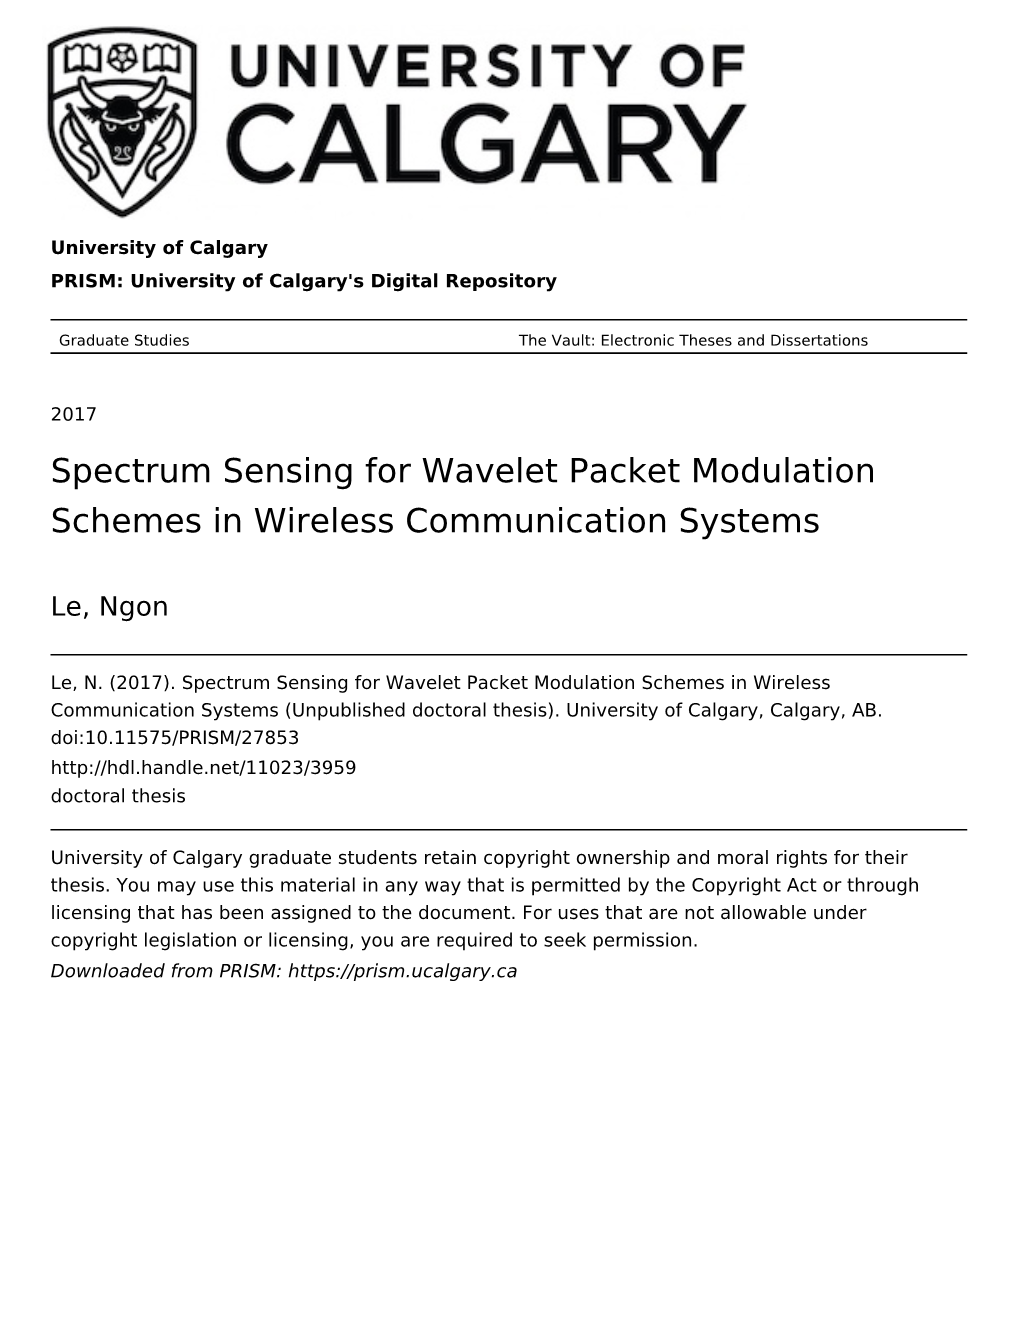 Spectrum Sensing for Wavelet Packet Modulation Schemes in Wireless Communication Systems